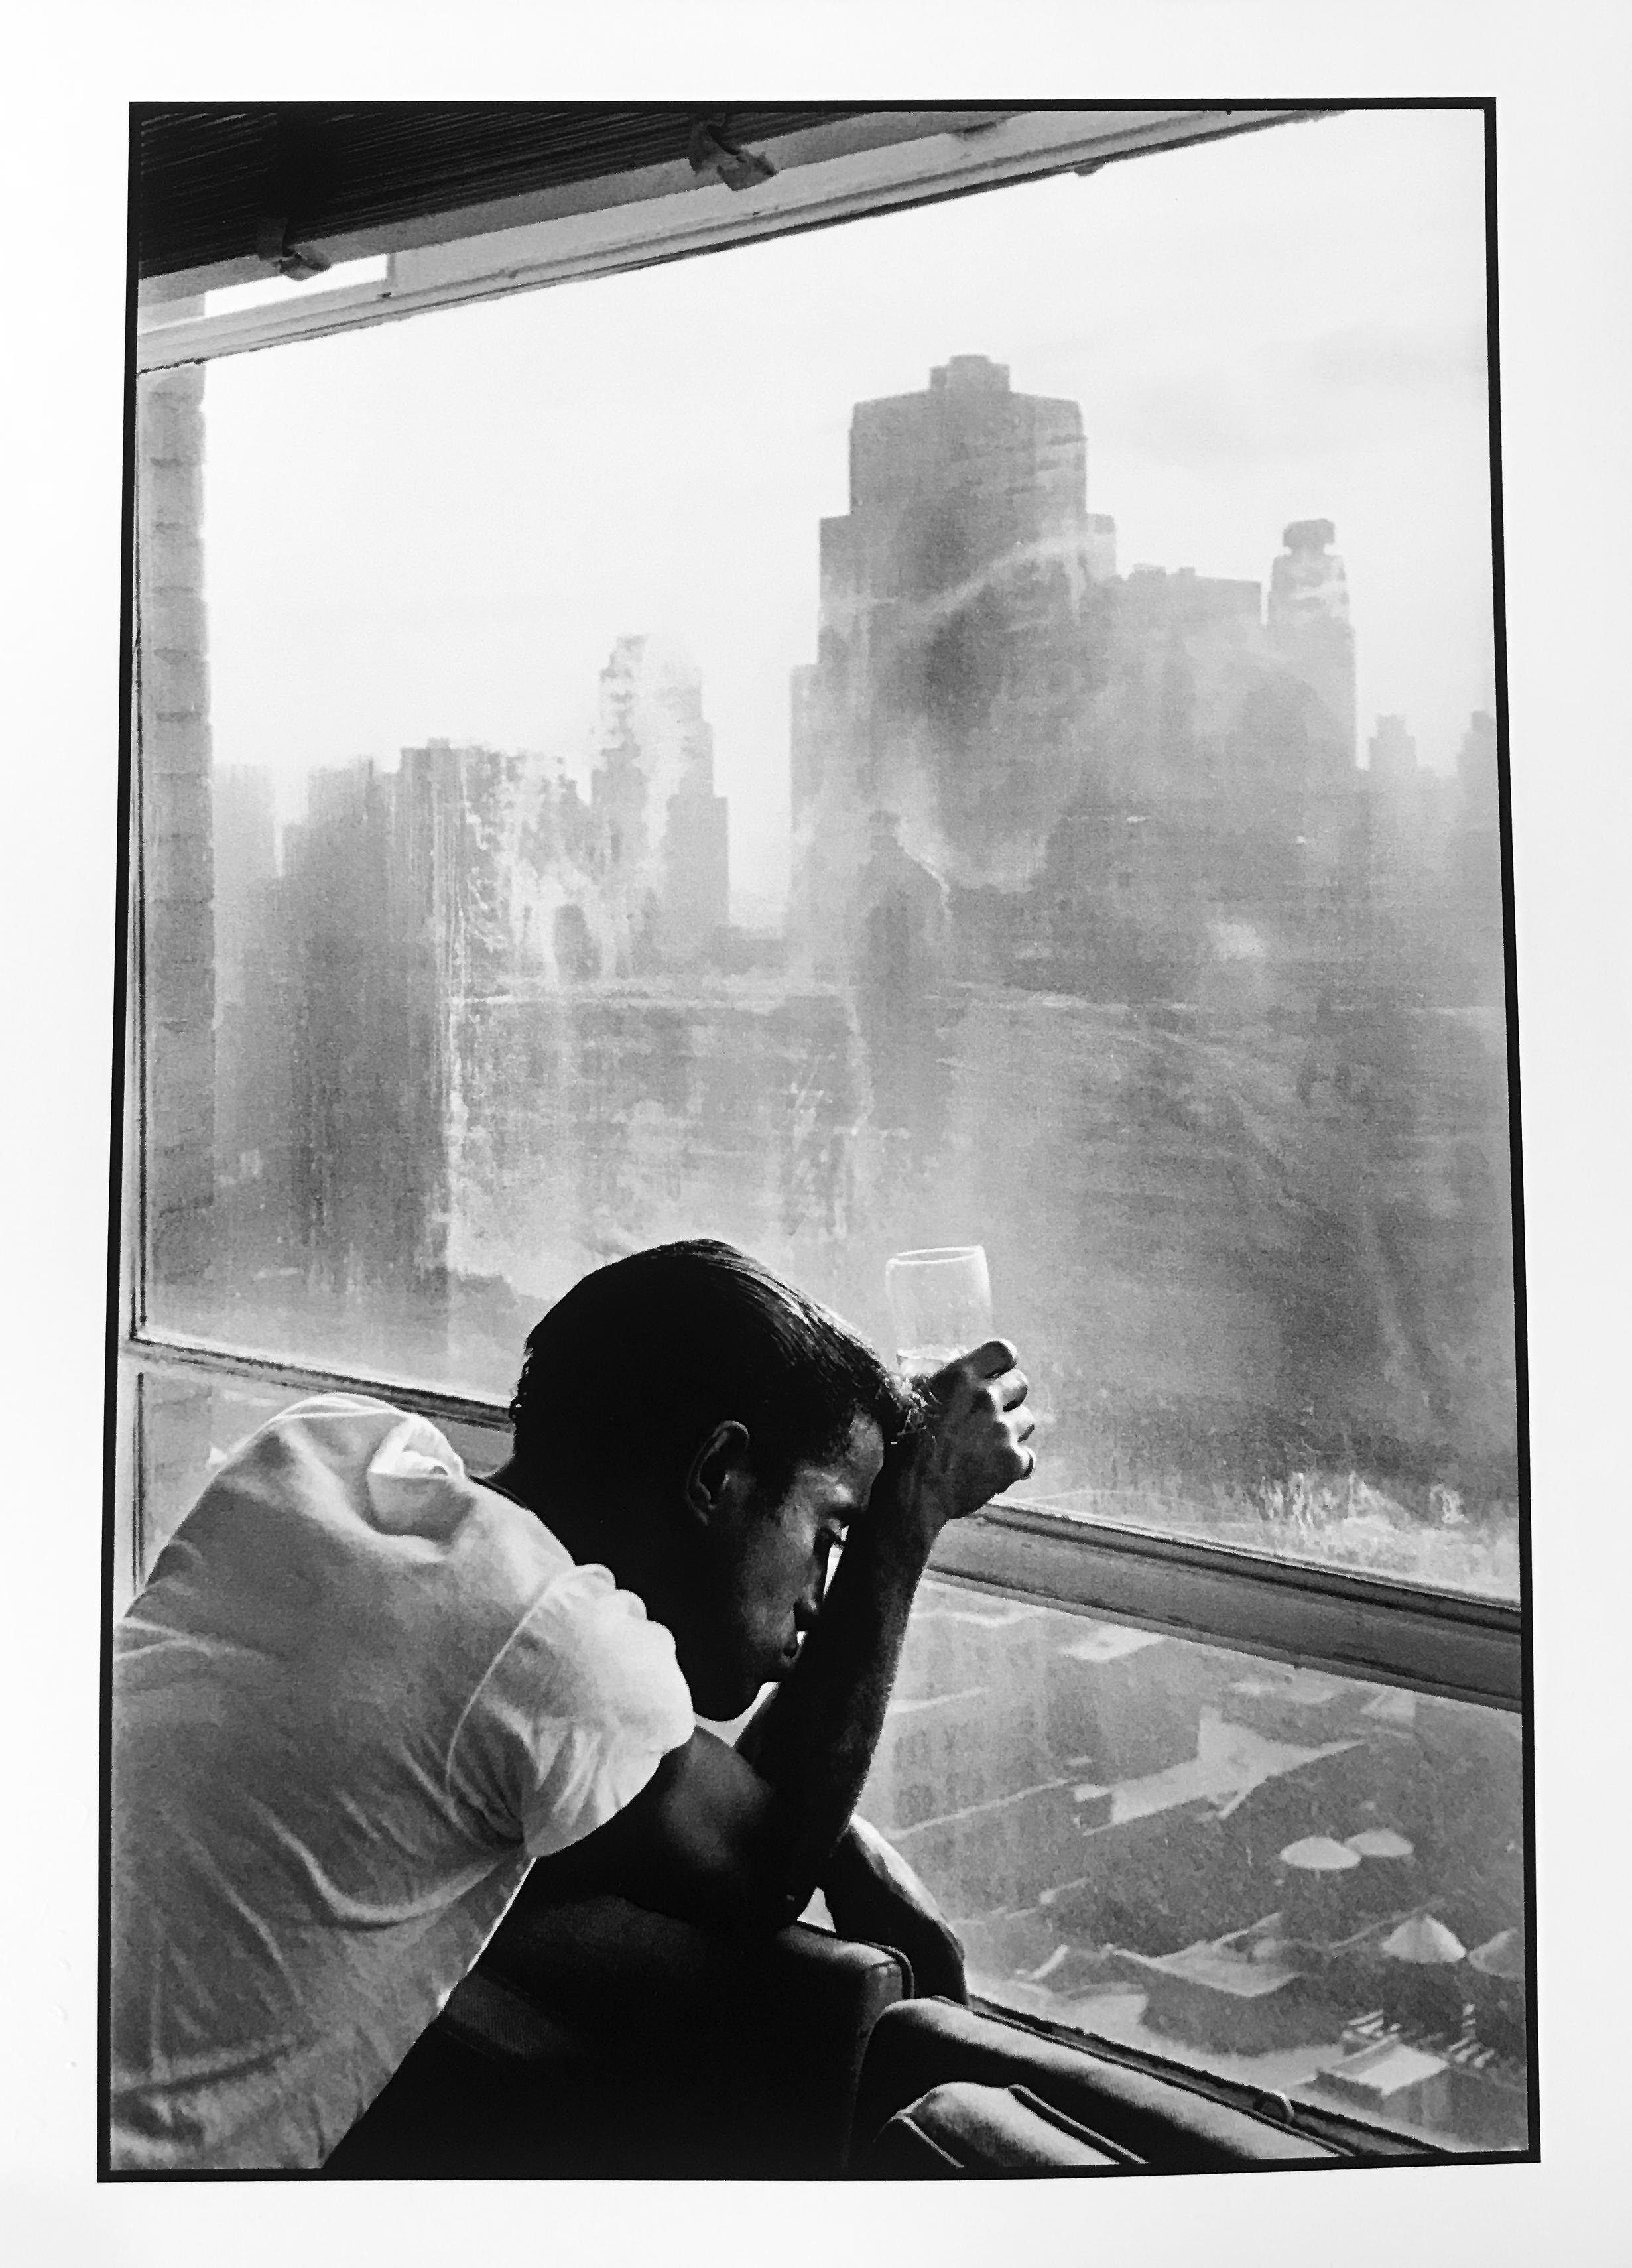 Burt Glinn Portrait Photograph - Sammy Davis Junior, New York City, Photographic Portrait African American Star